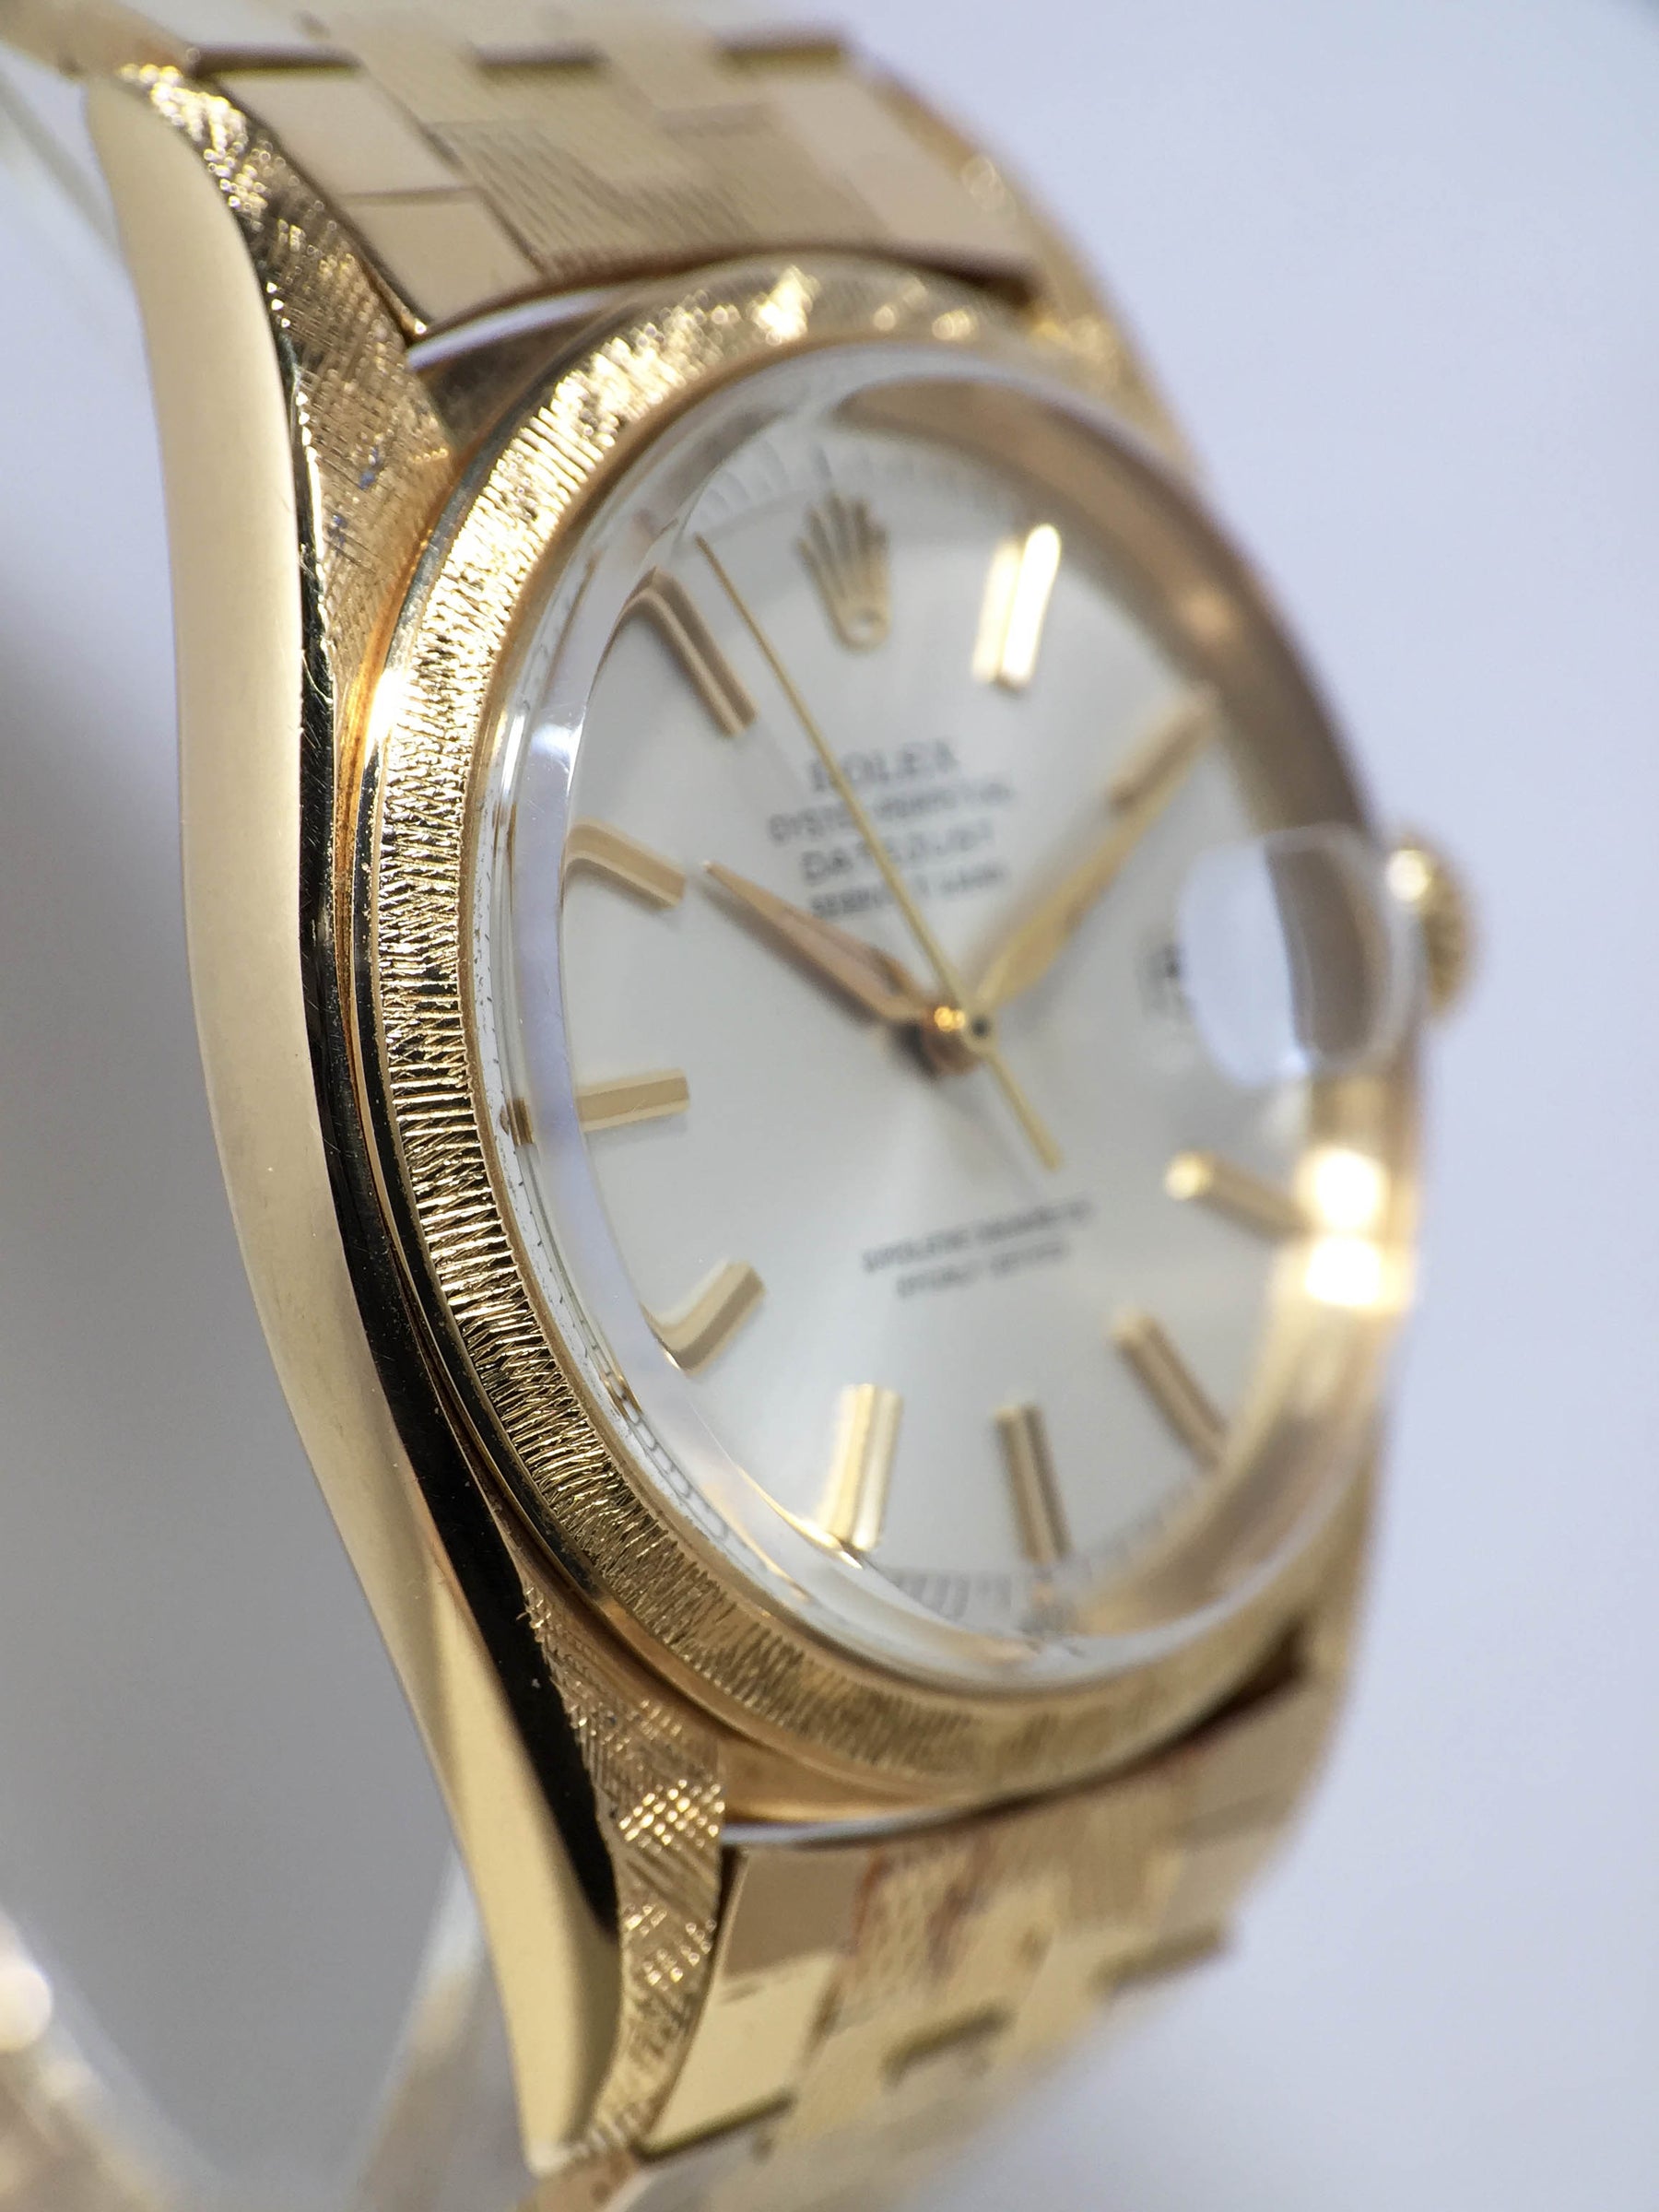 1961 Rolex Datejust Serpico Y Laino Ref. 1602 (with rare original bracelet)